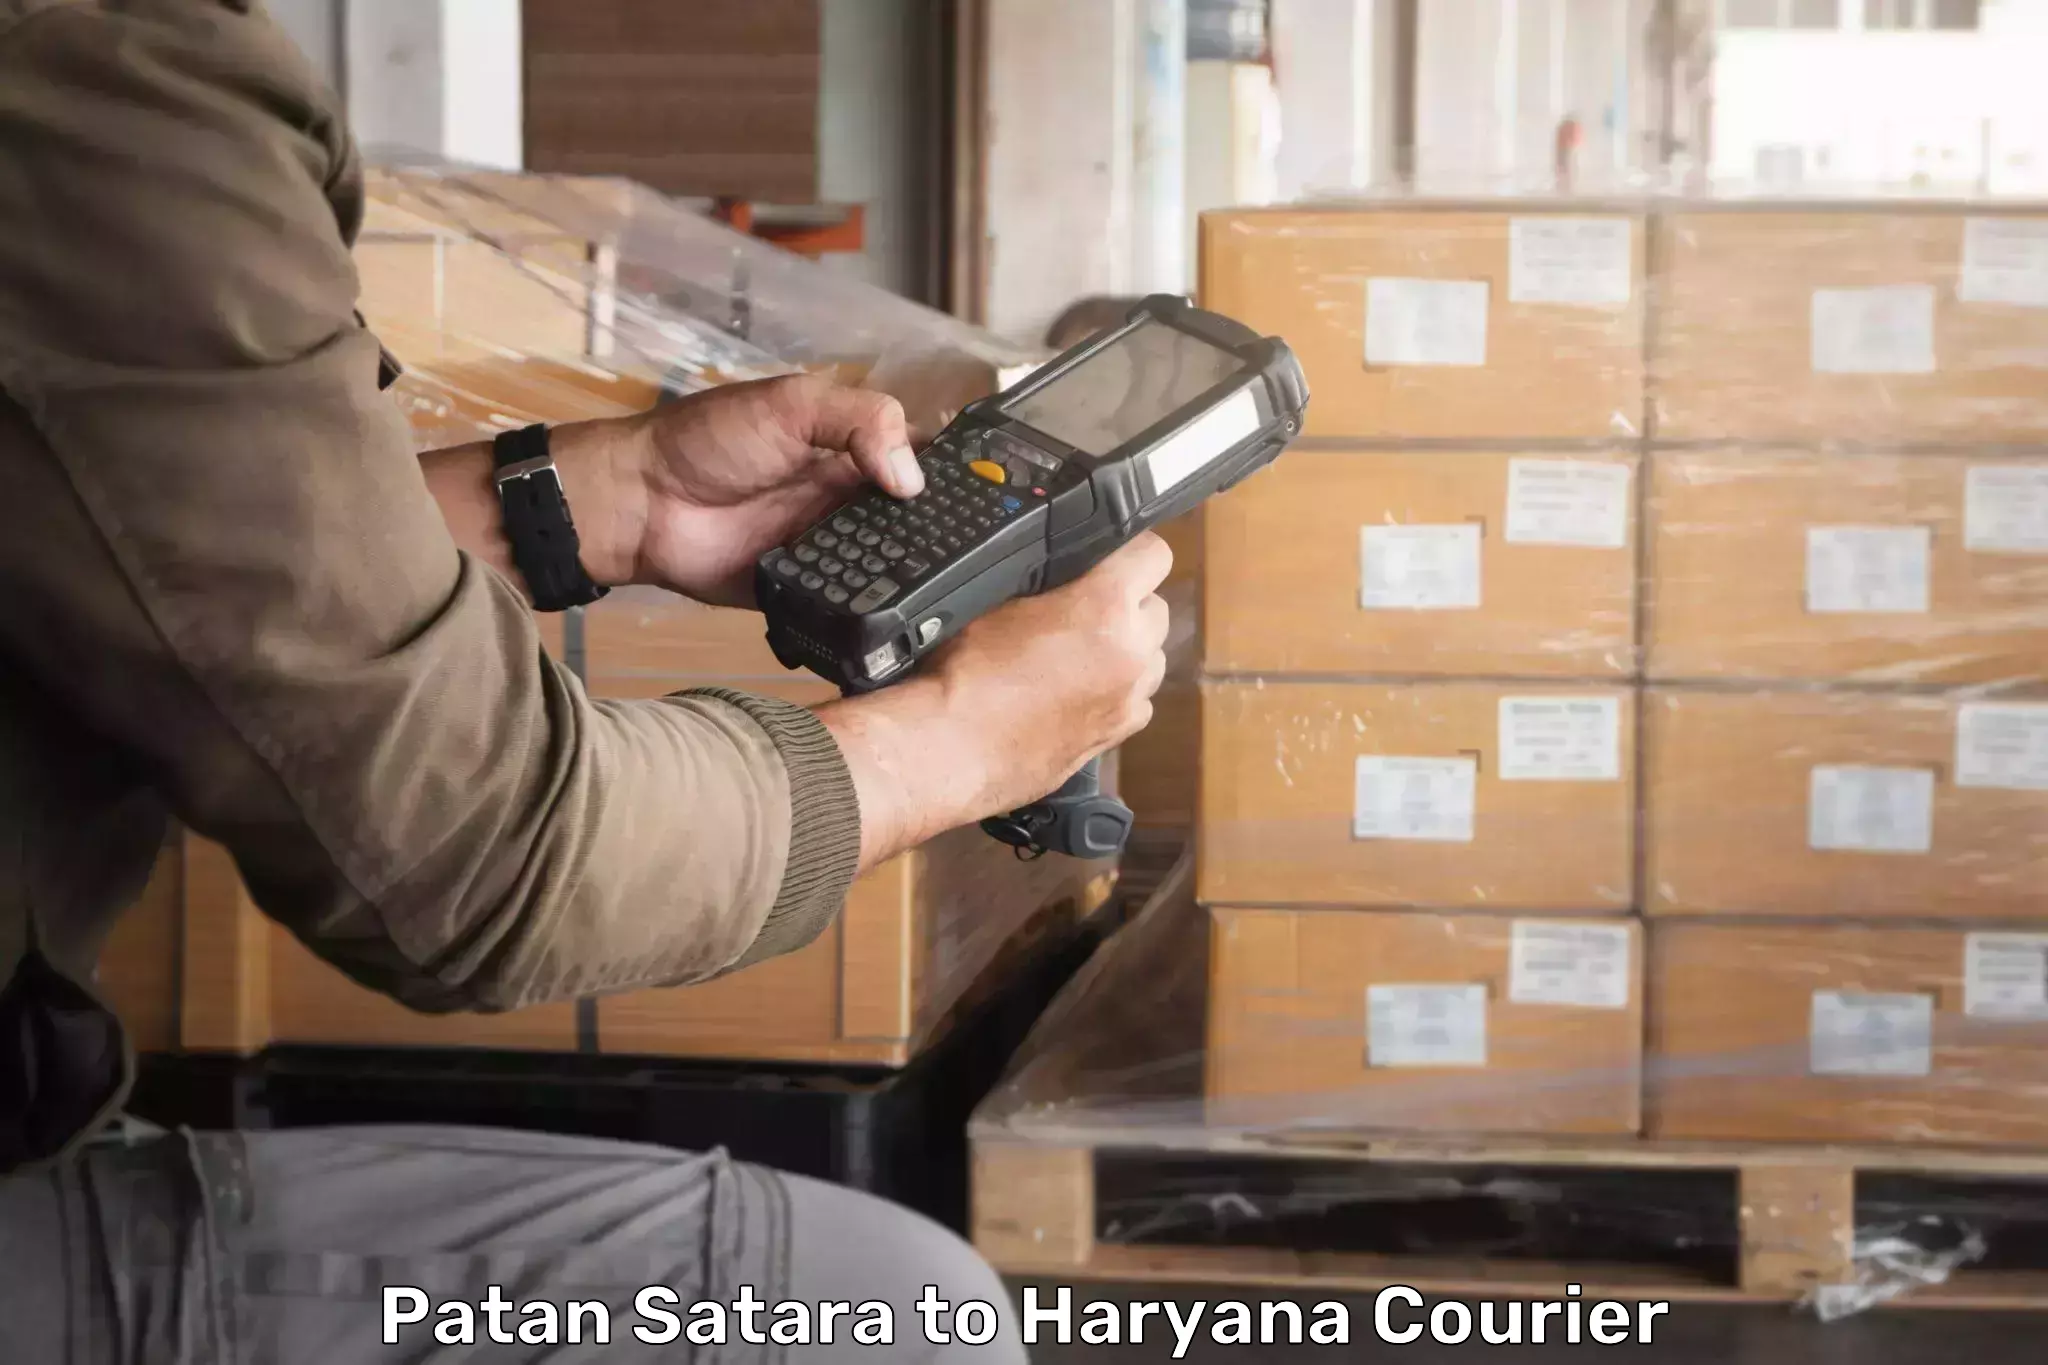 24-hour courier service Patan Satara to Haryana